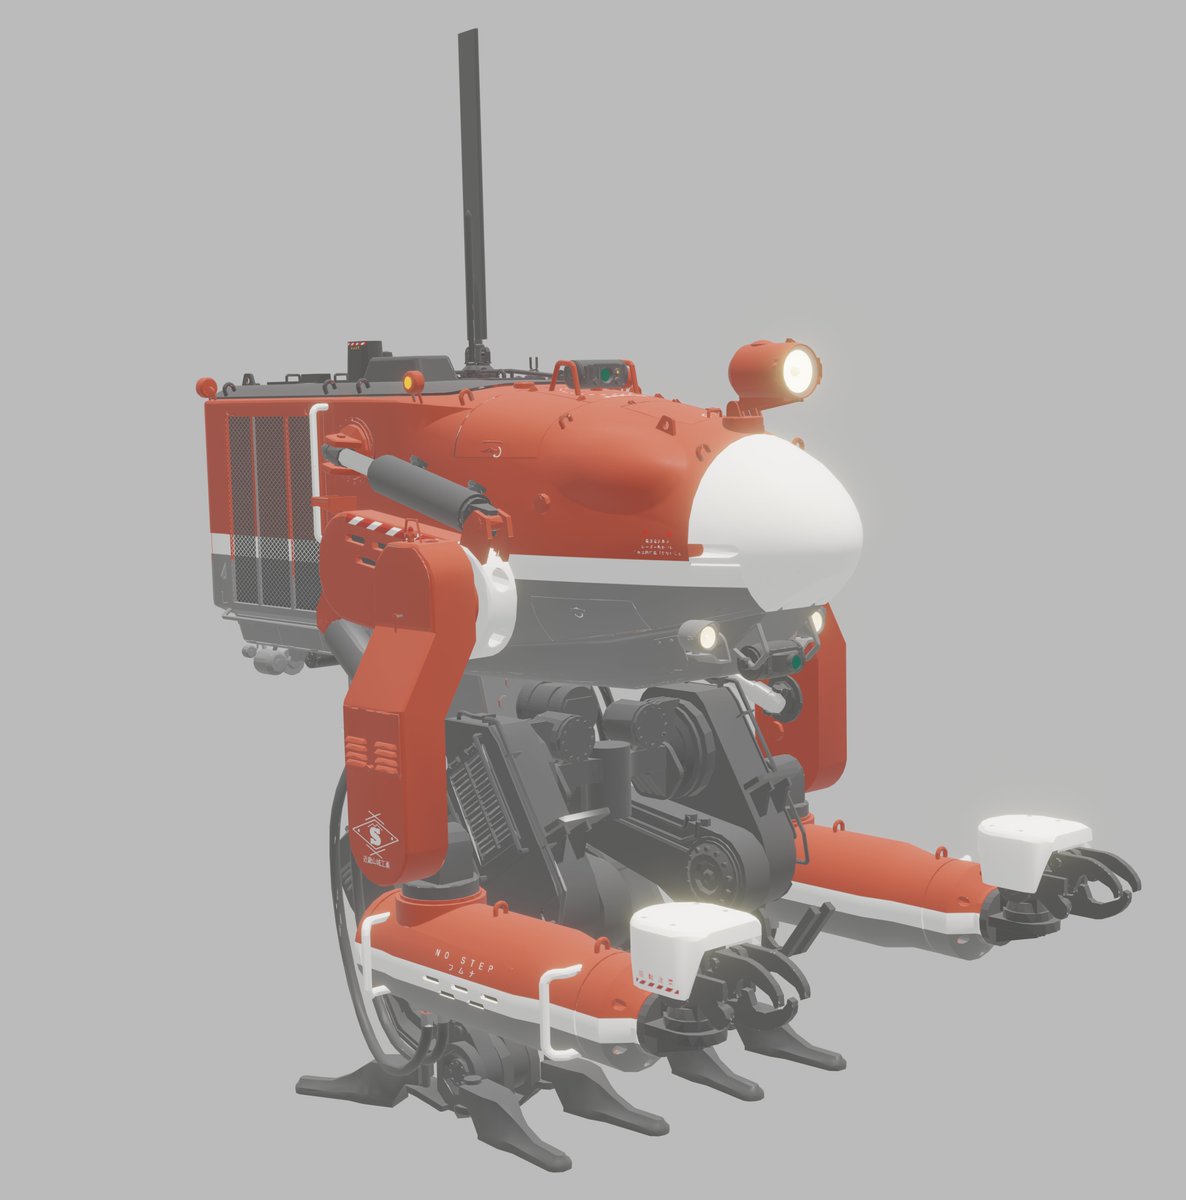 DER-50
1980年代の大型自律歩行ロボット。
ディーゼルエンジンで発電し、その電力で稼働する。
#発掘大作戦2021応募 